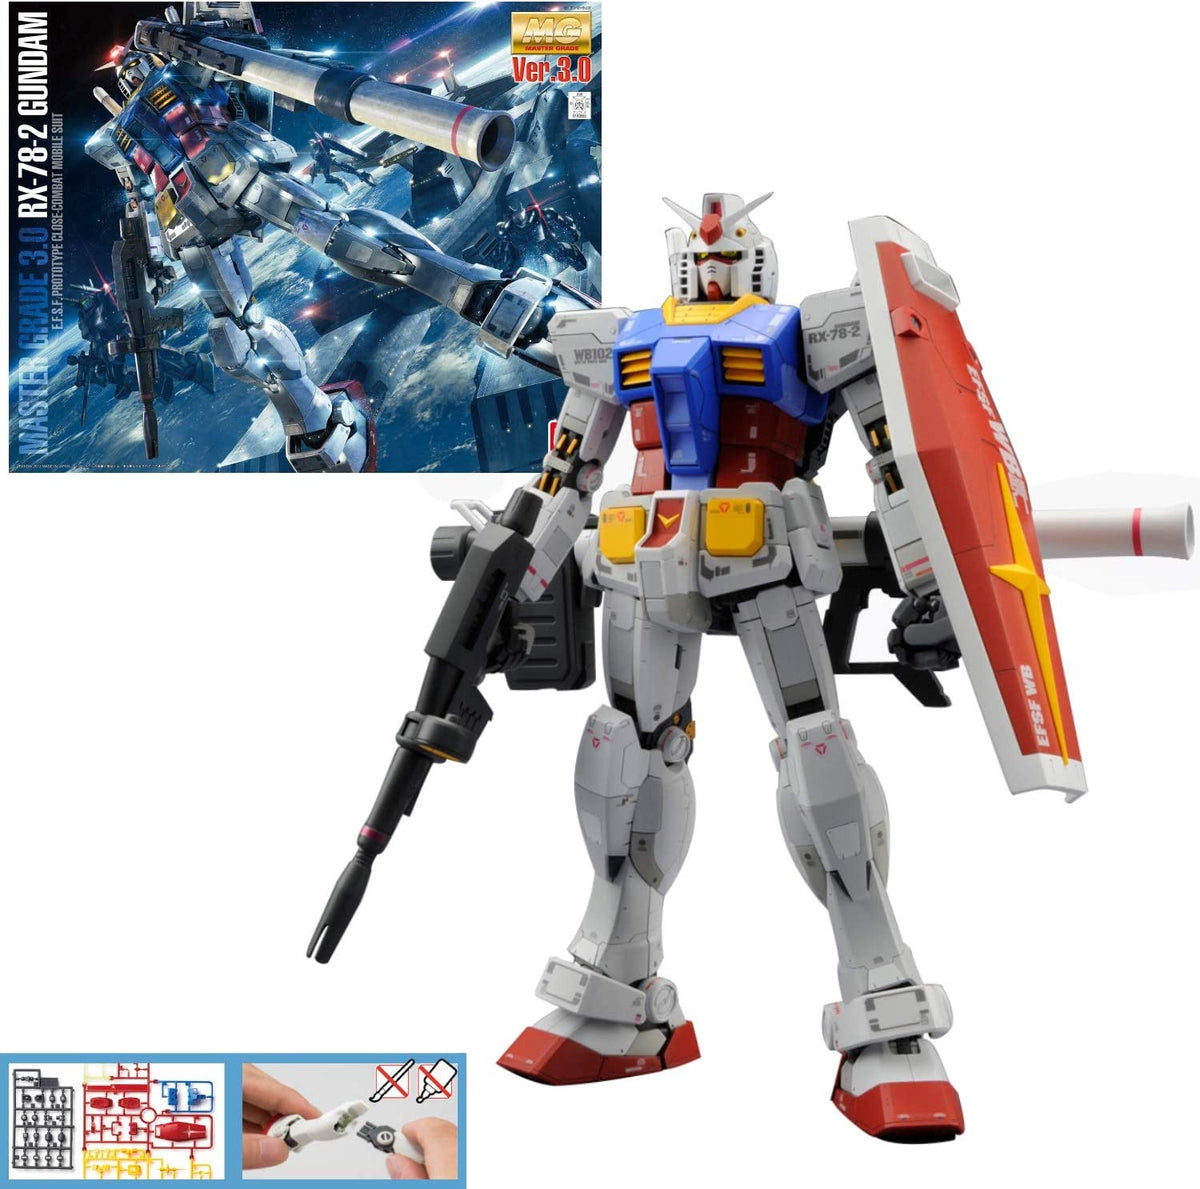 MG 1/100 RX-78-2 Gundam E.F.S.F Prototype Close-Combat Mobile Suit ver. 3.0